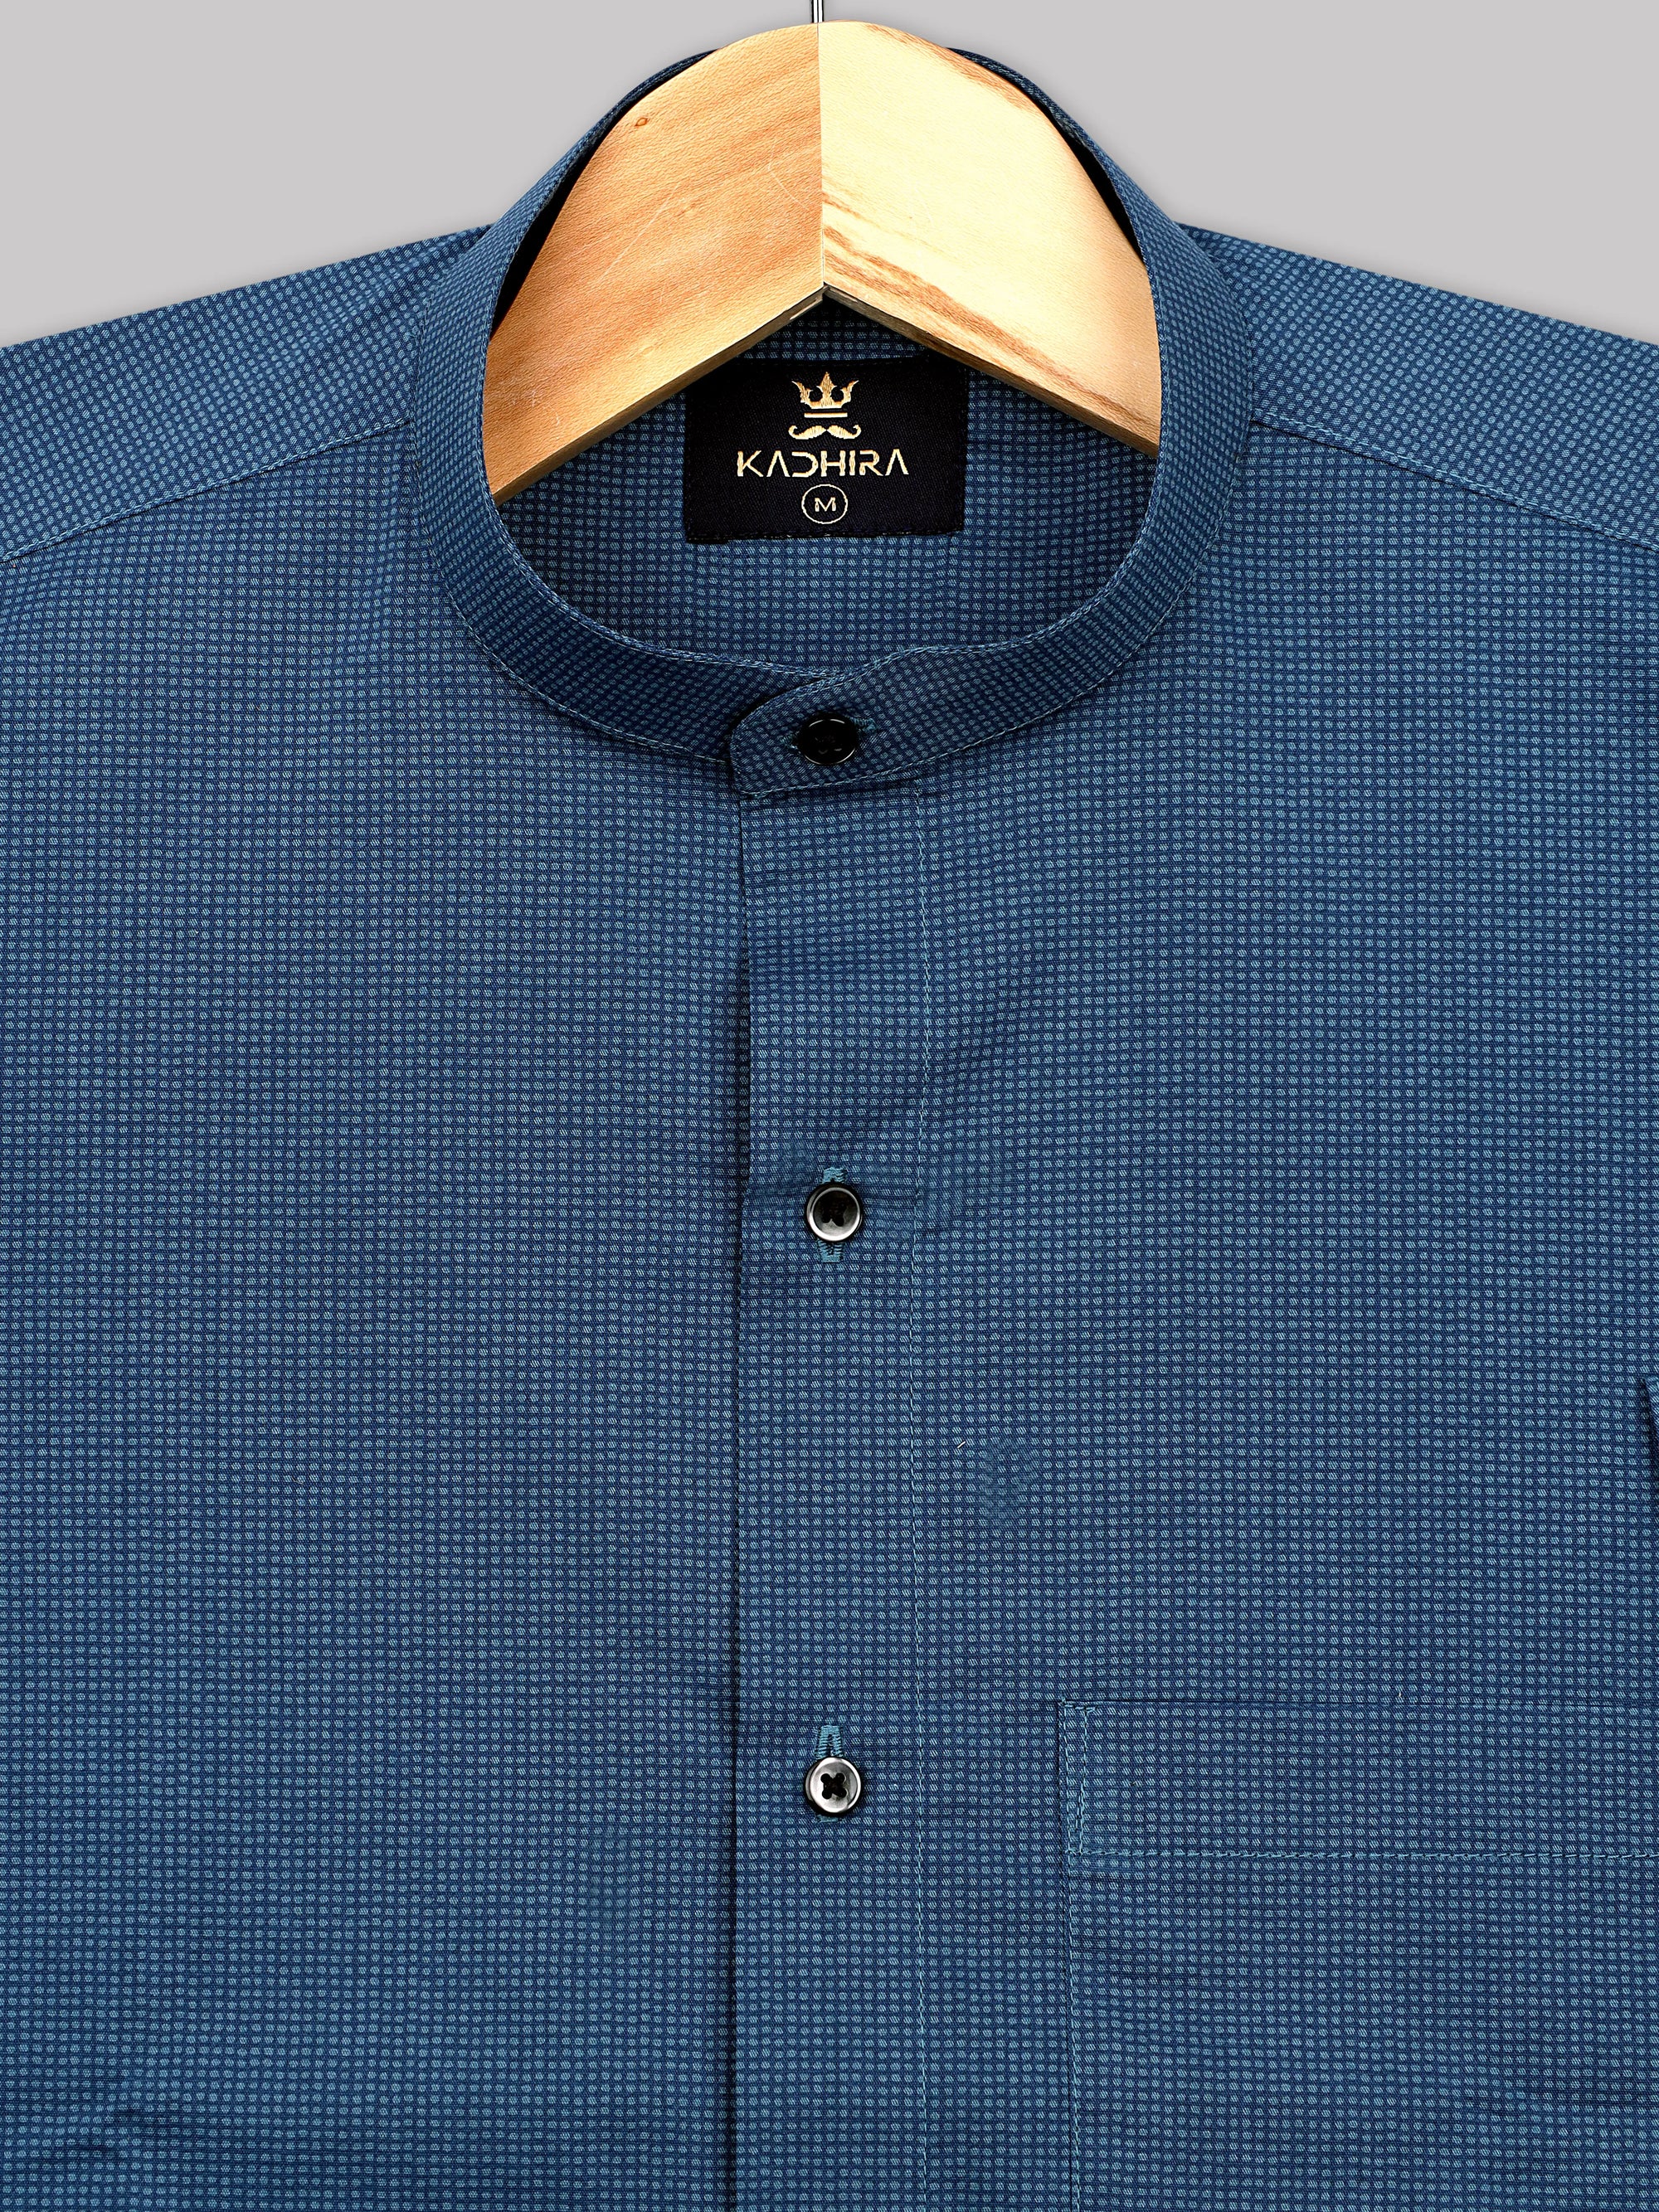 Capri Blue Dotted Printed Premium Cotton Shirt